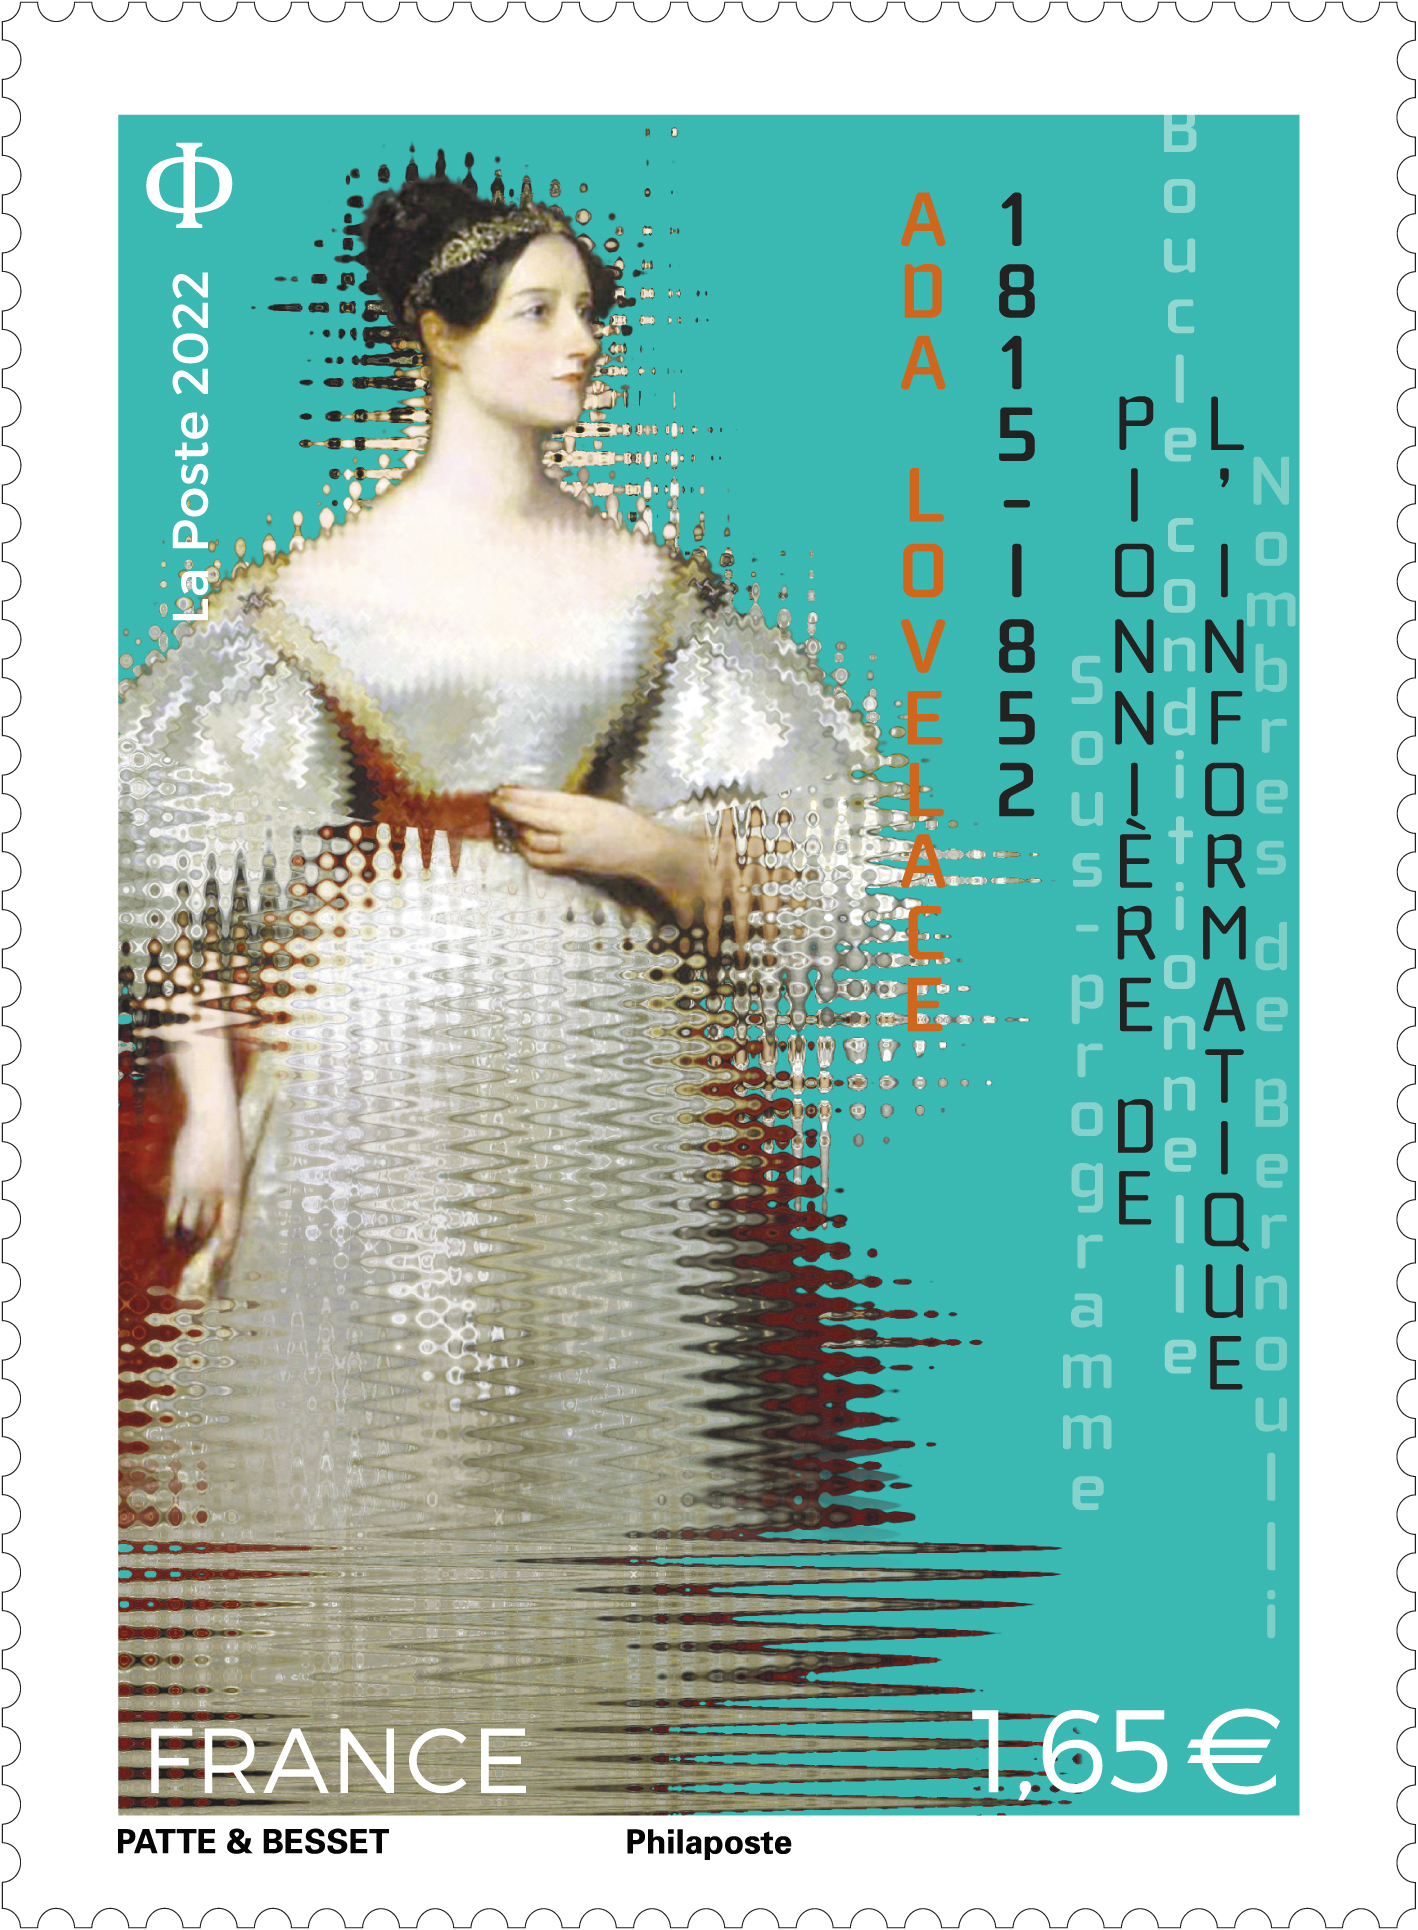 Emission Ada Lovelace (1815 - 1852)